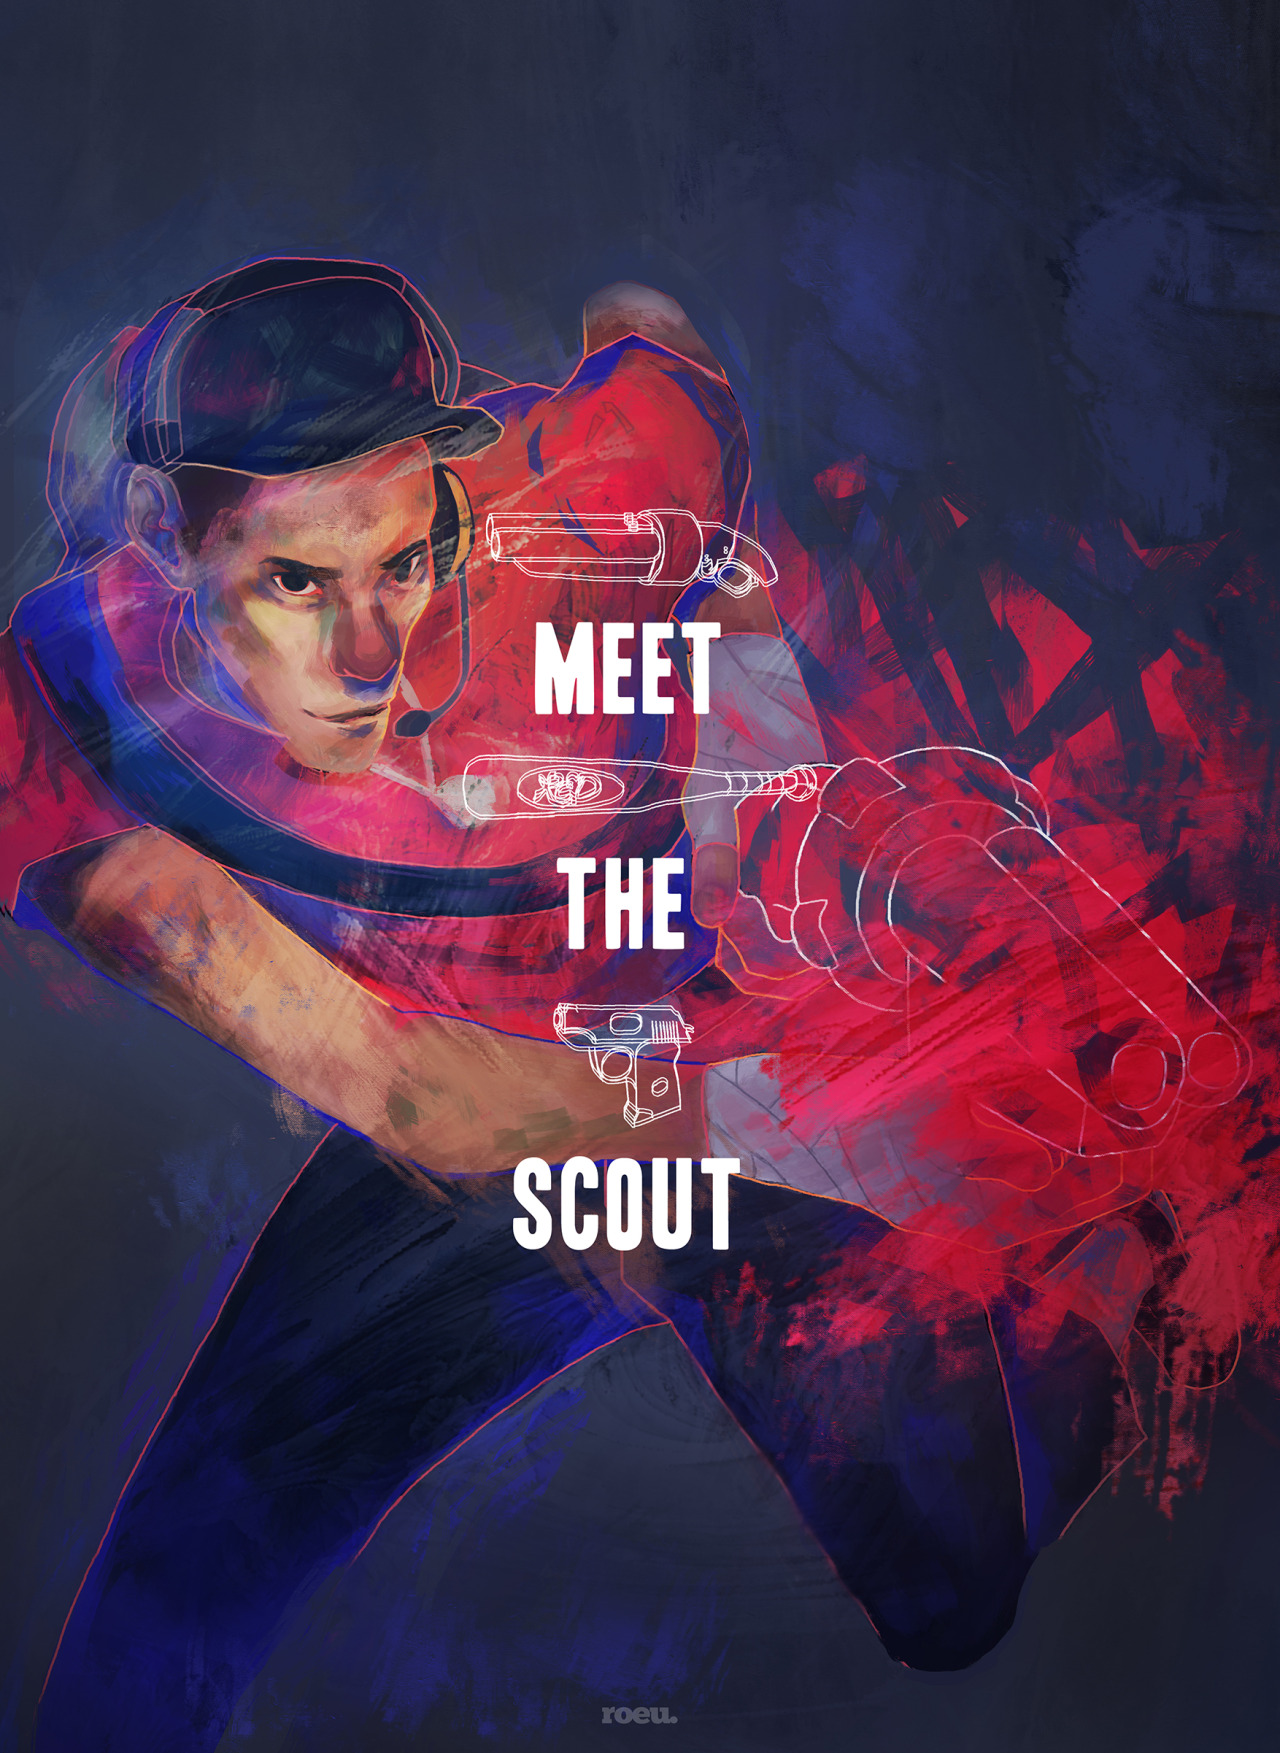 “Meet the scout!” Illustration by studioroeu 